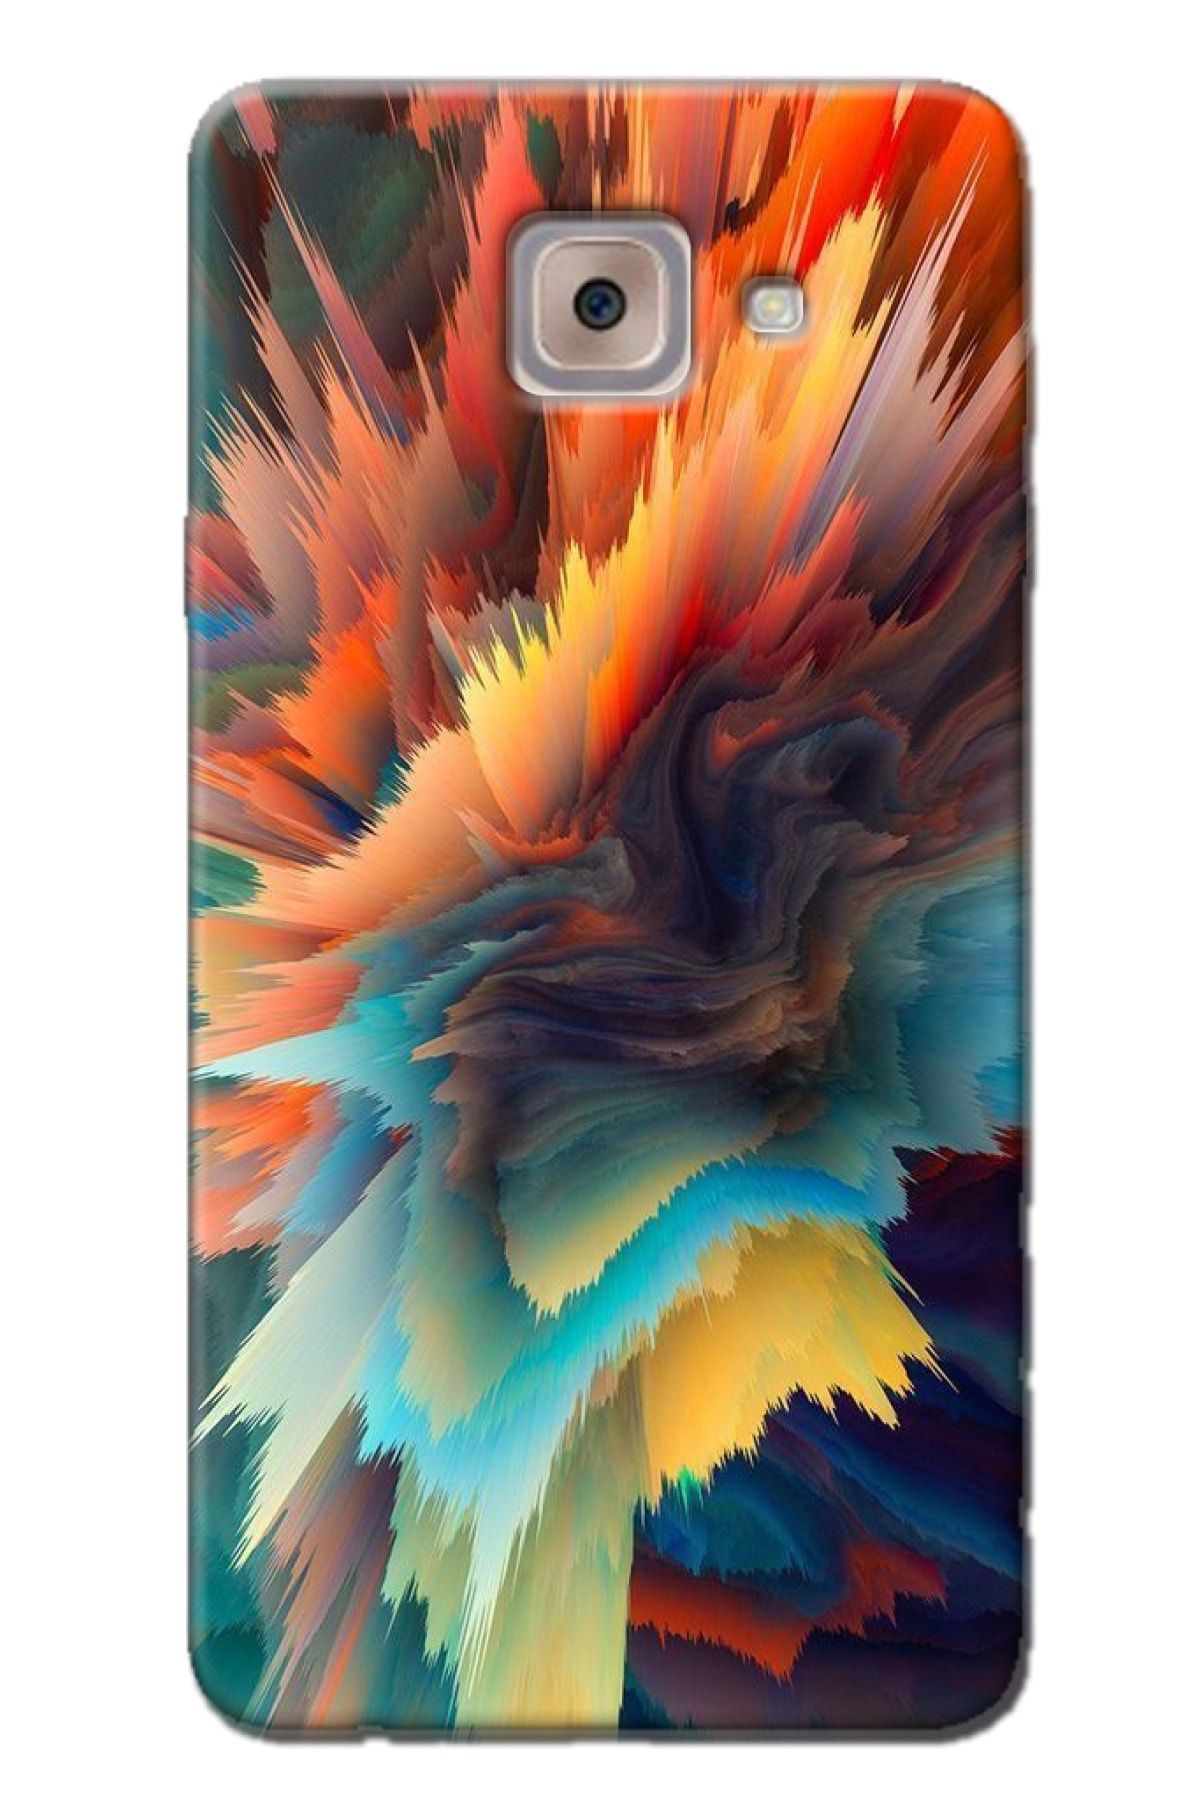 Noprin Samsung Galaxy J7 Max Kılıf Silikon Baskılı Desenli Arka Kapak